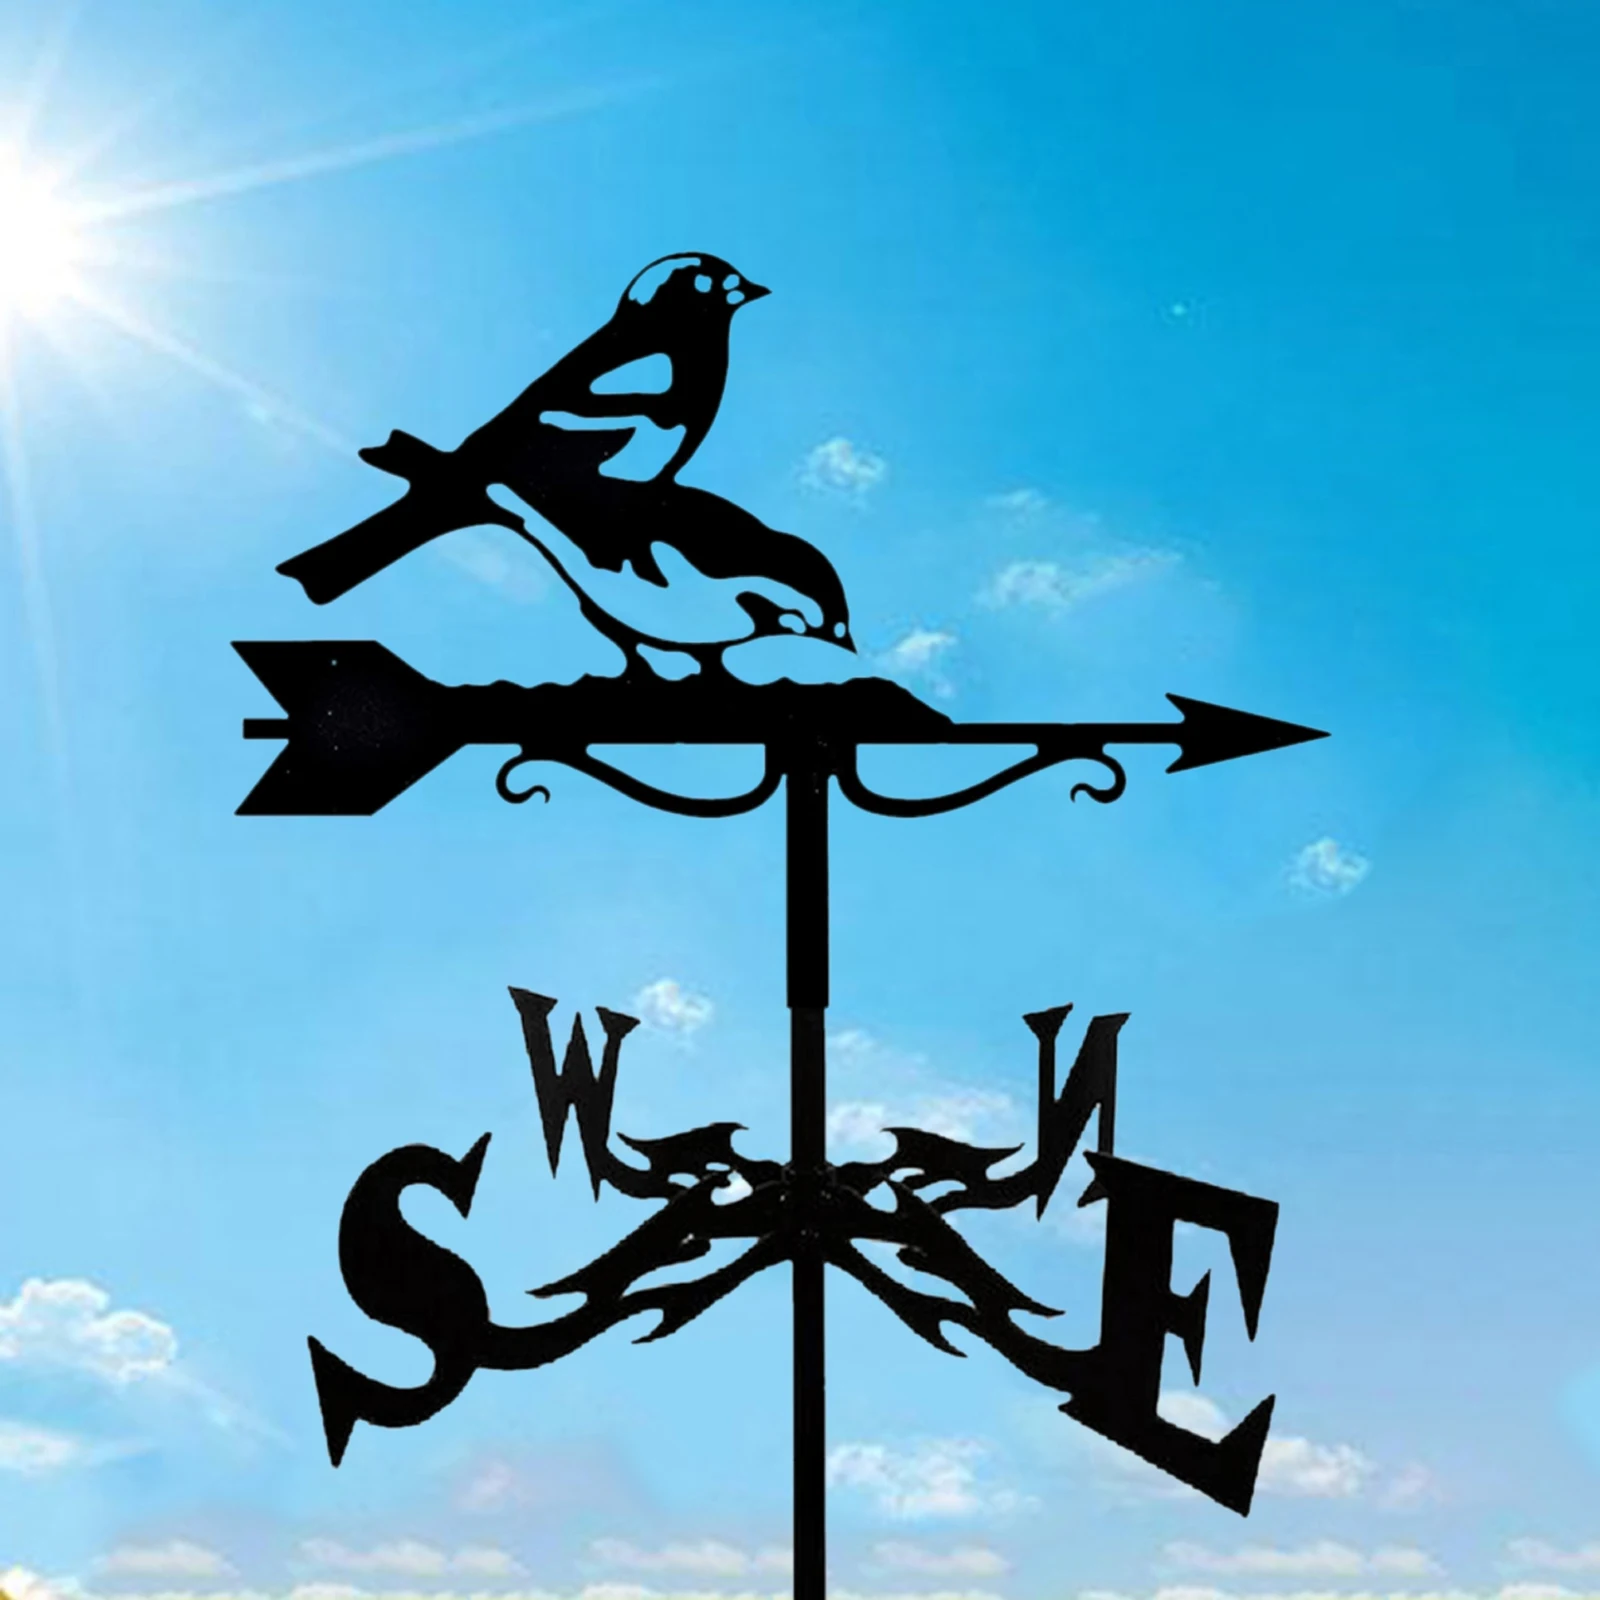 Metal Craft Wind Vane Weathervane with Animal Silhouette Ornament Roof Mount Weather Vane Farm Scene Garden Stake Art